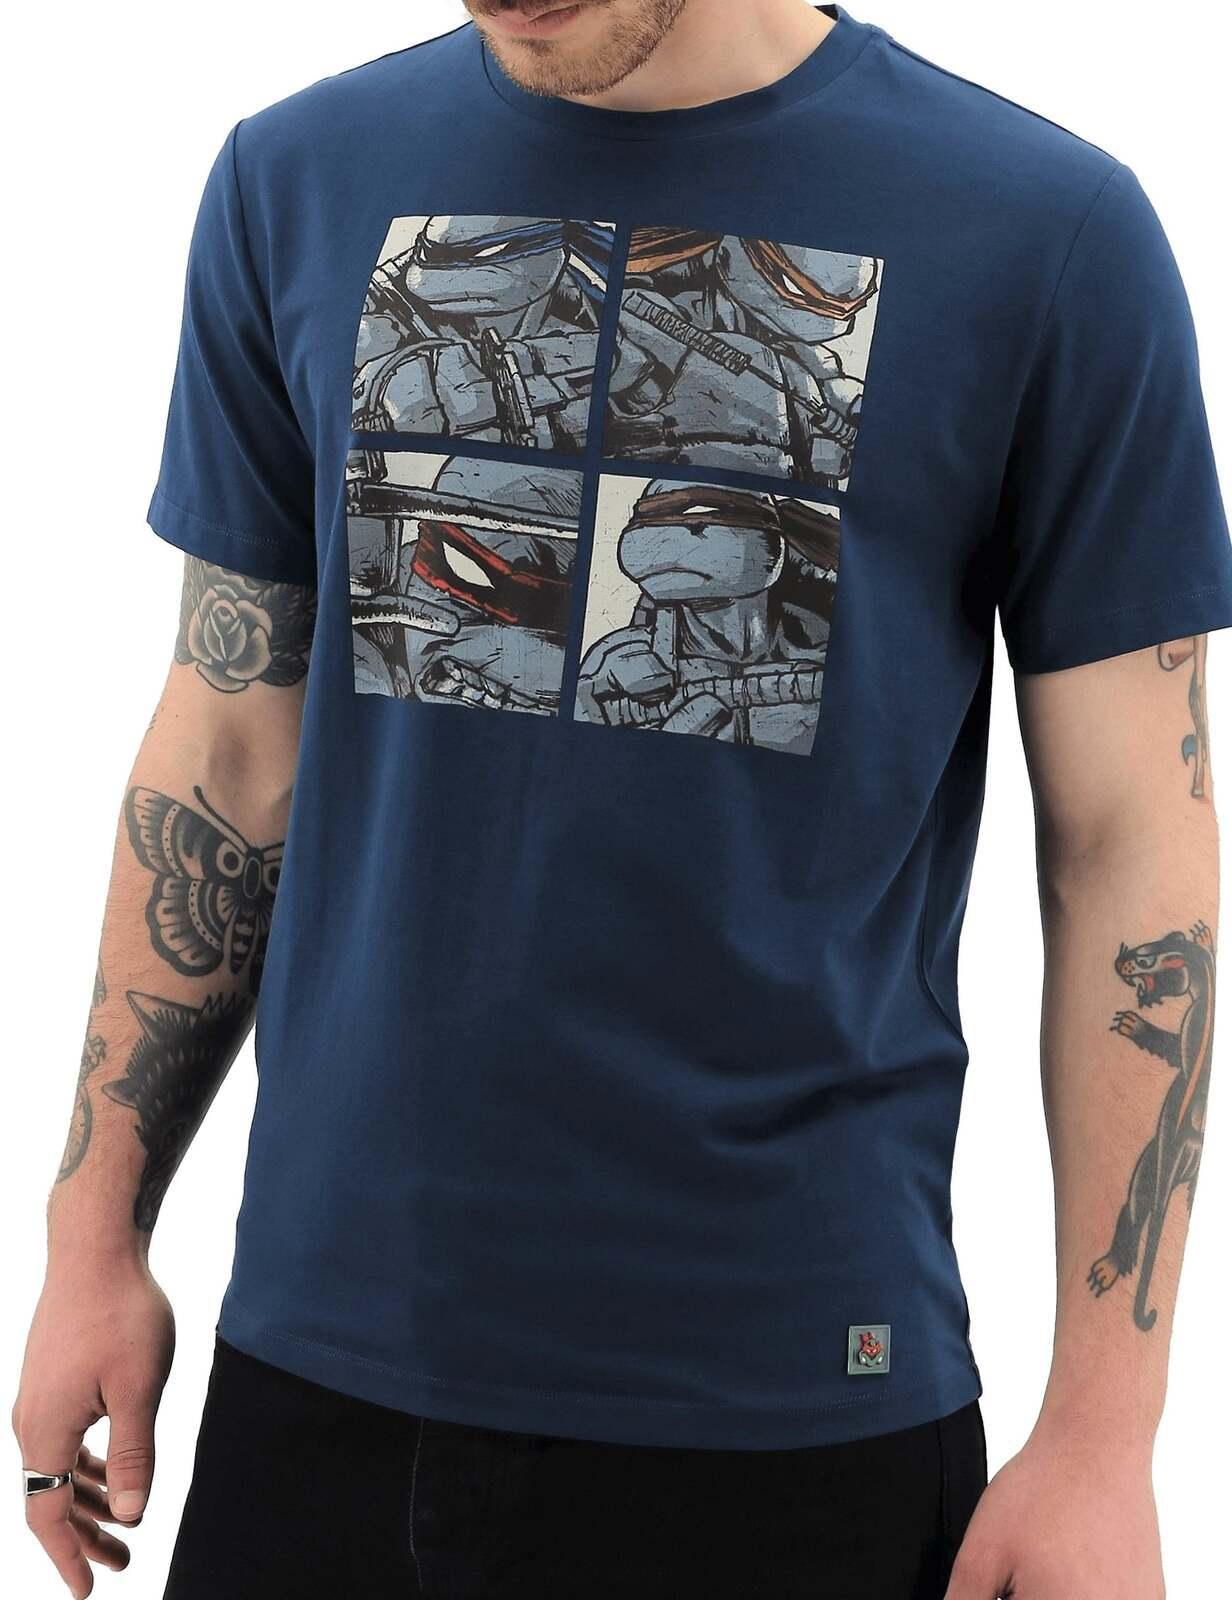 Teenage Mutant Ninja Turtles Mens T Shirt Tee Top Cowbunga - Navy - M